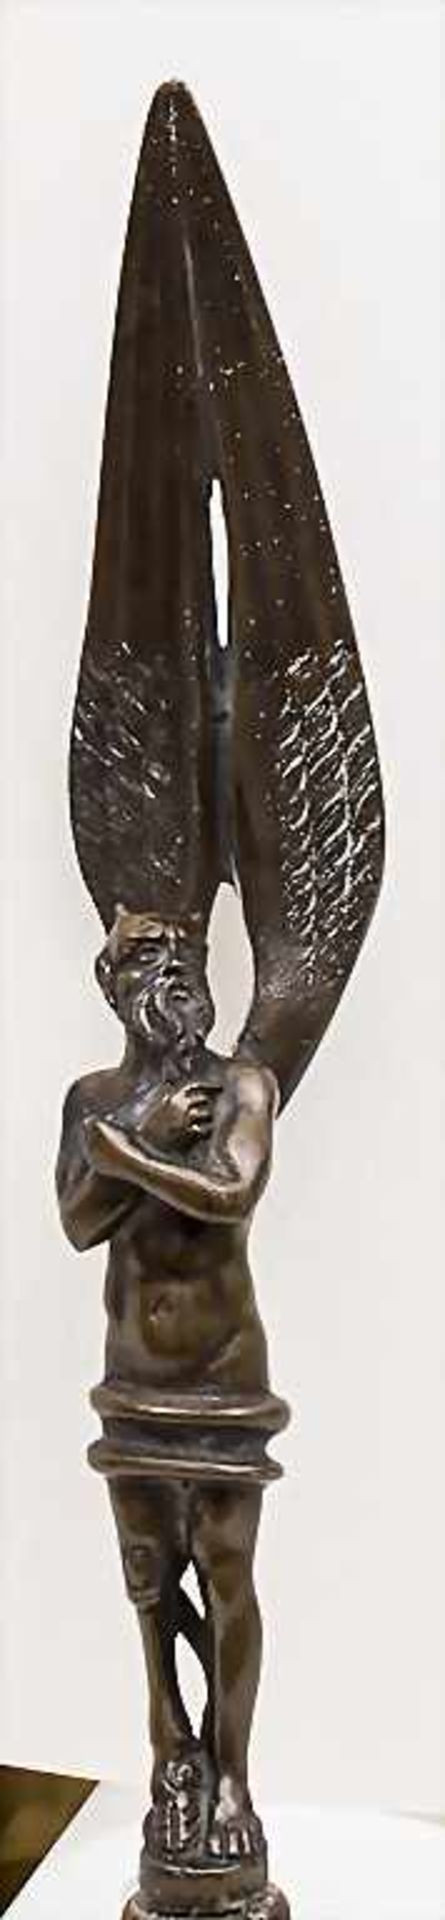 Bronze Brieföffner mit Teufels-Skulptur / A bronze letter opener with the sculpture of a devil - Image 3 of 3